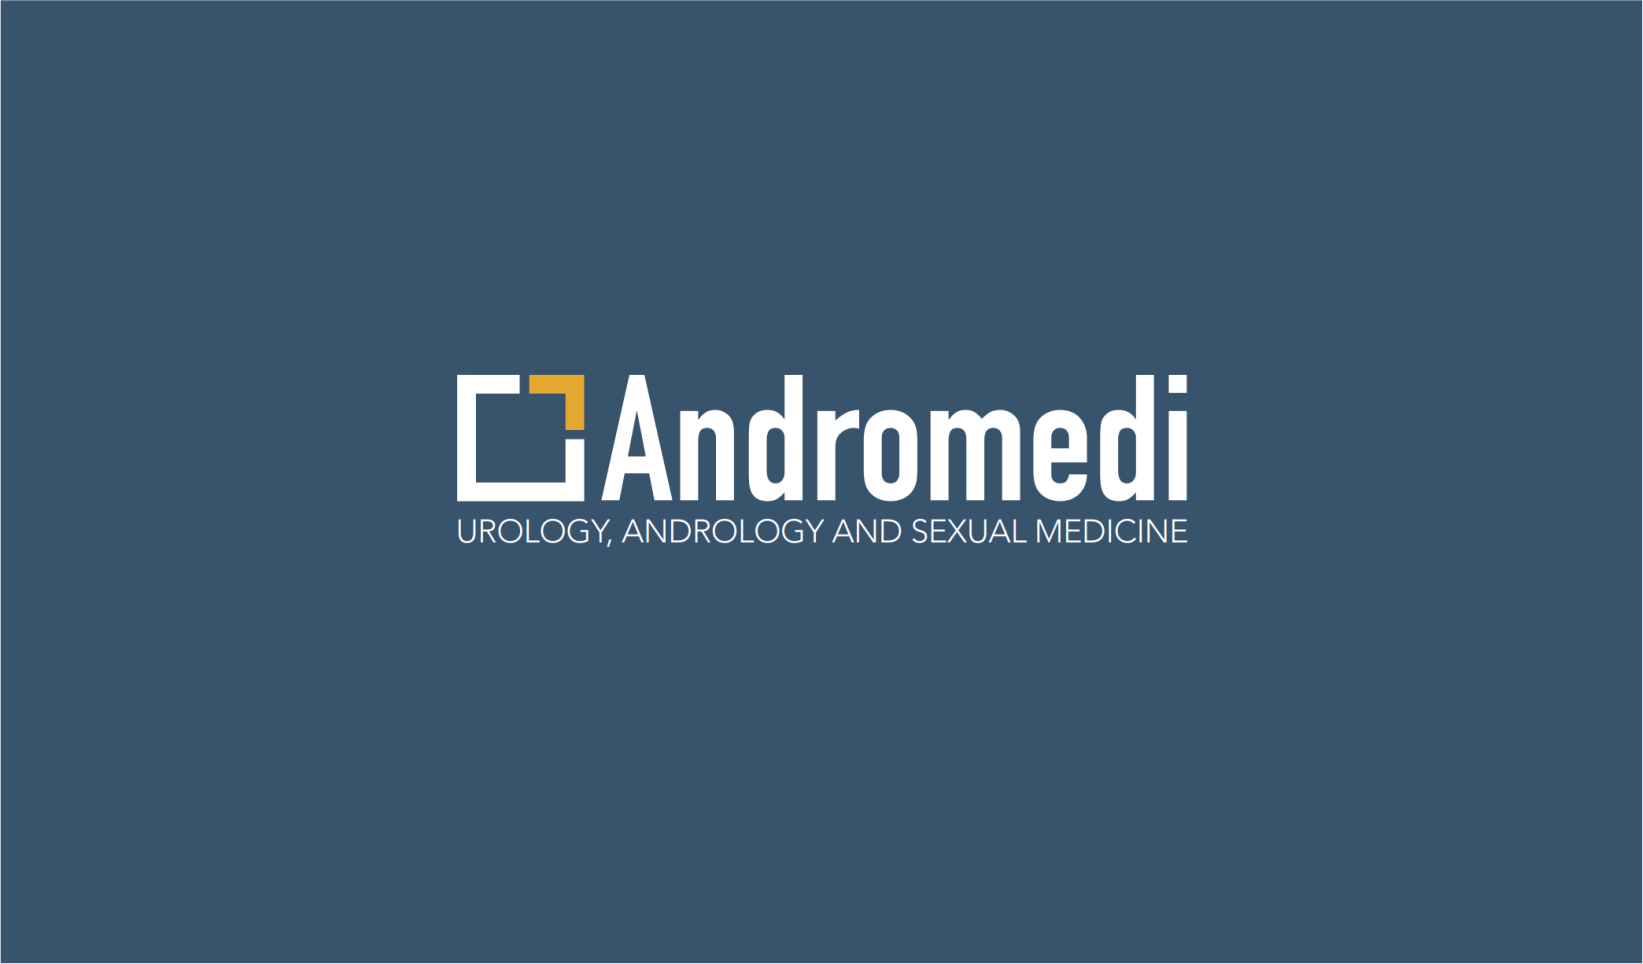 Andromedi - Avances en vasectomías reversibles